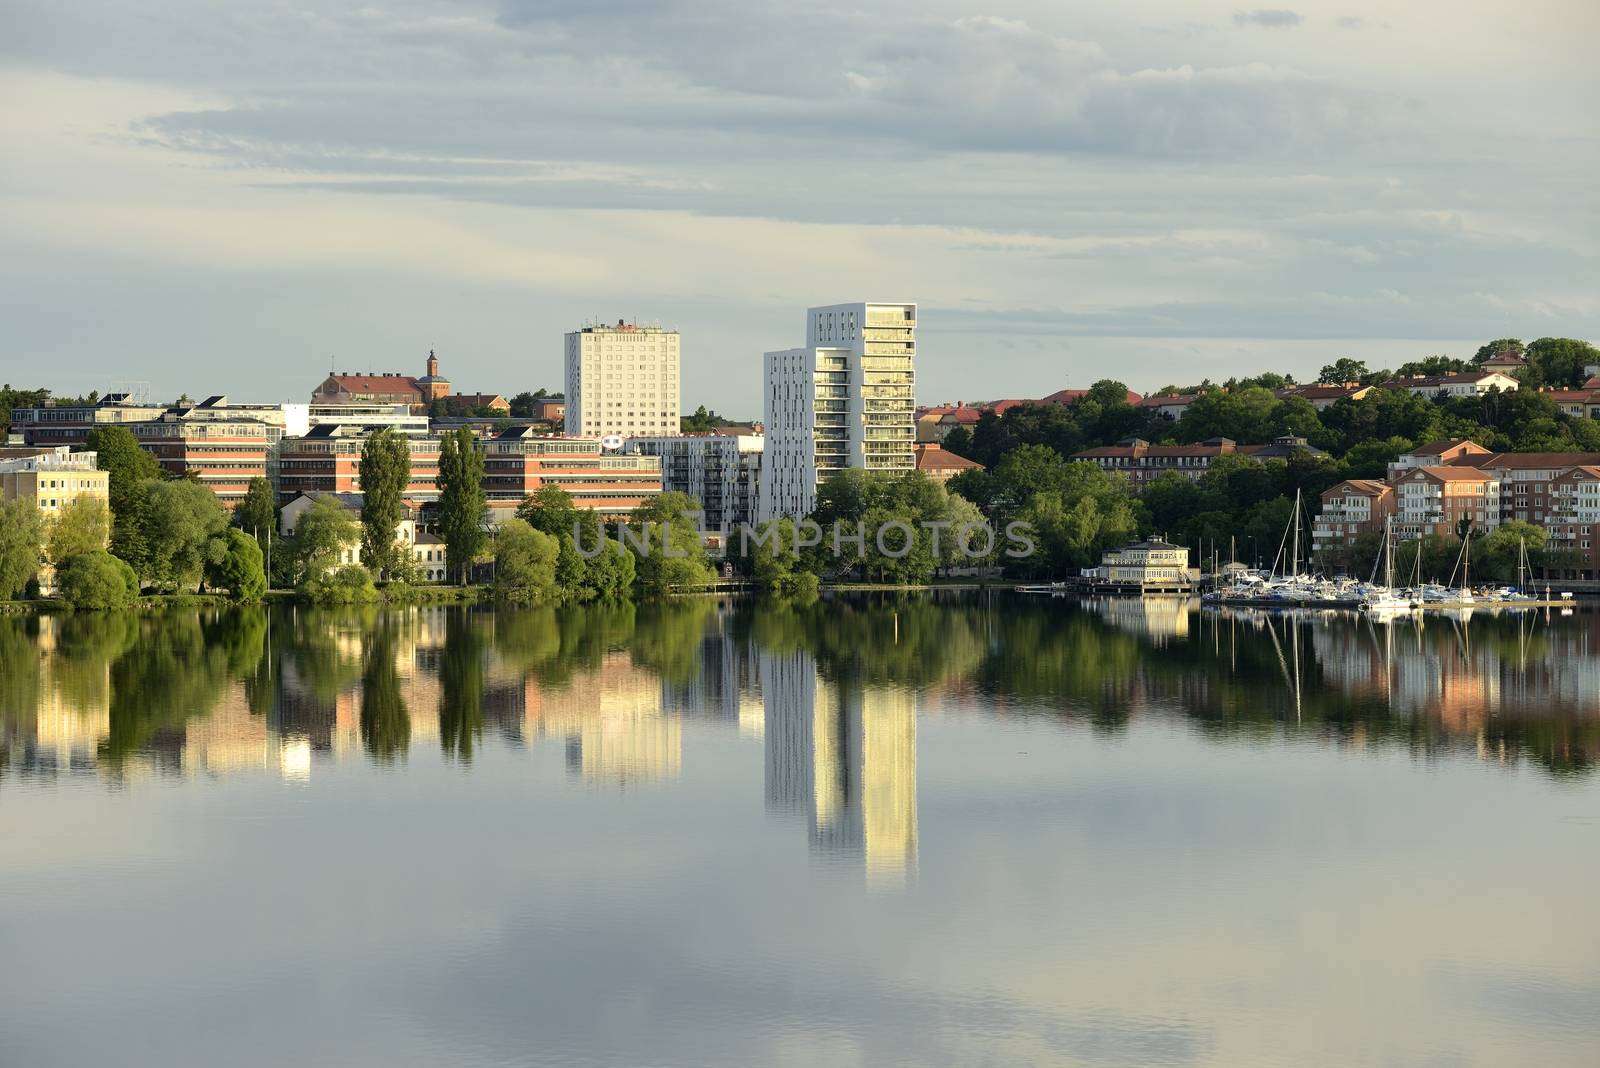 Stockholm embankment